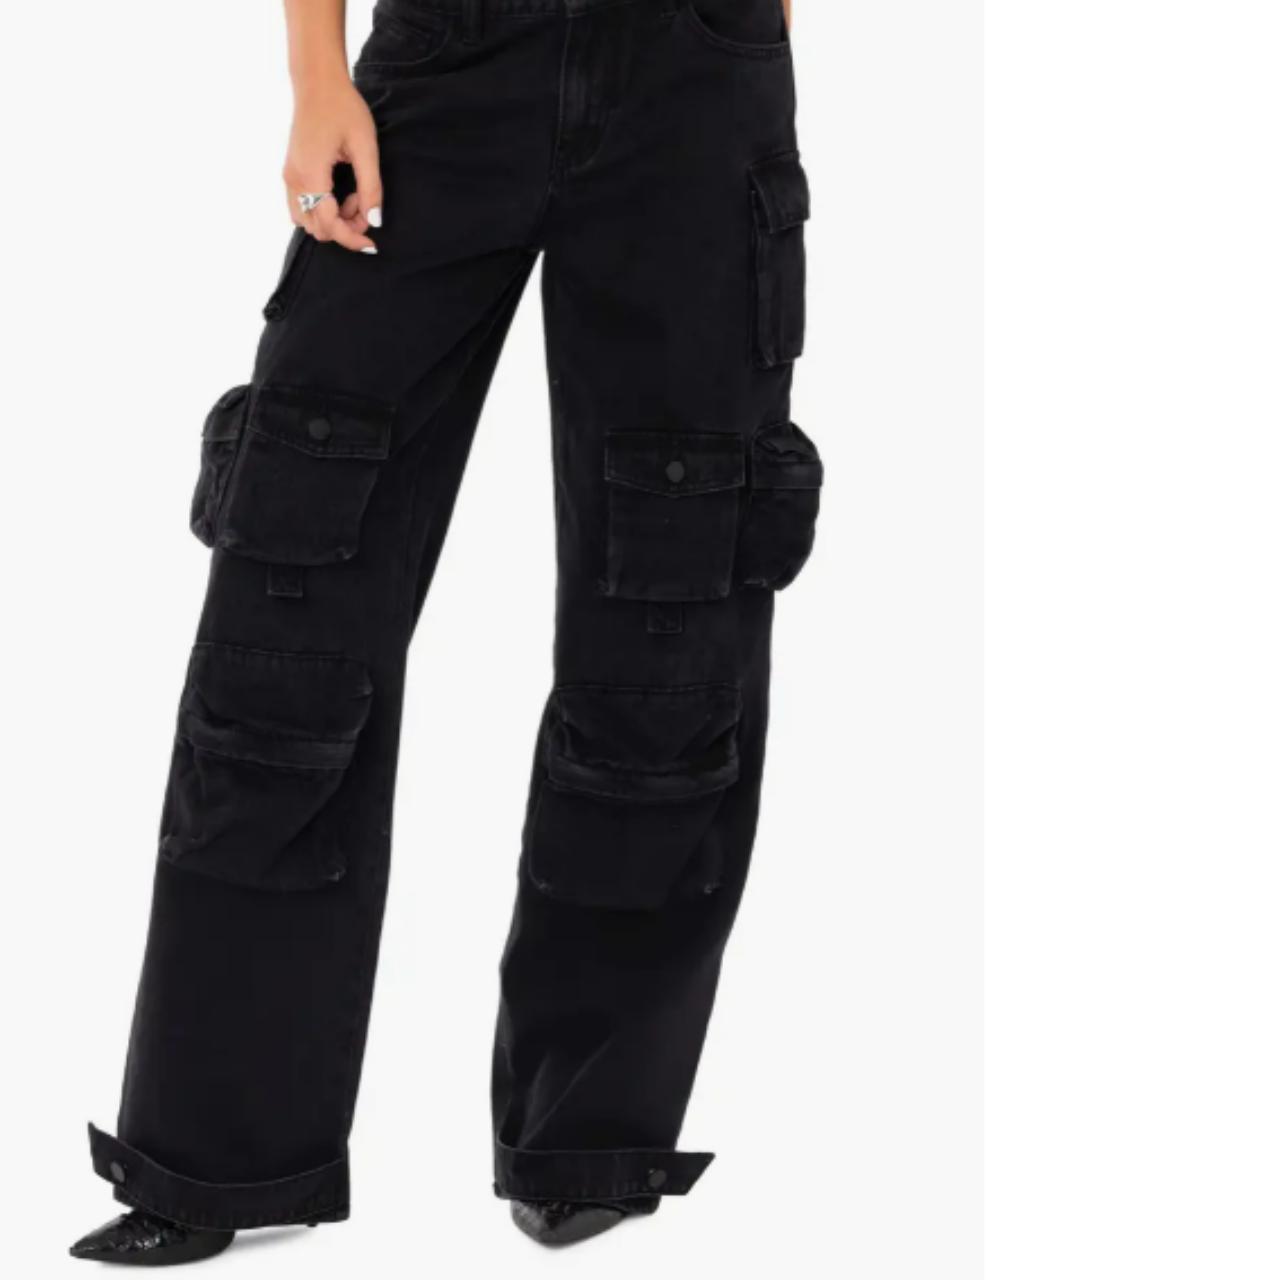 edikted black cargo jeans $97.60 on website - Depop